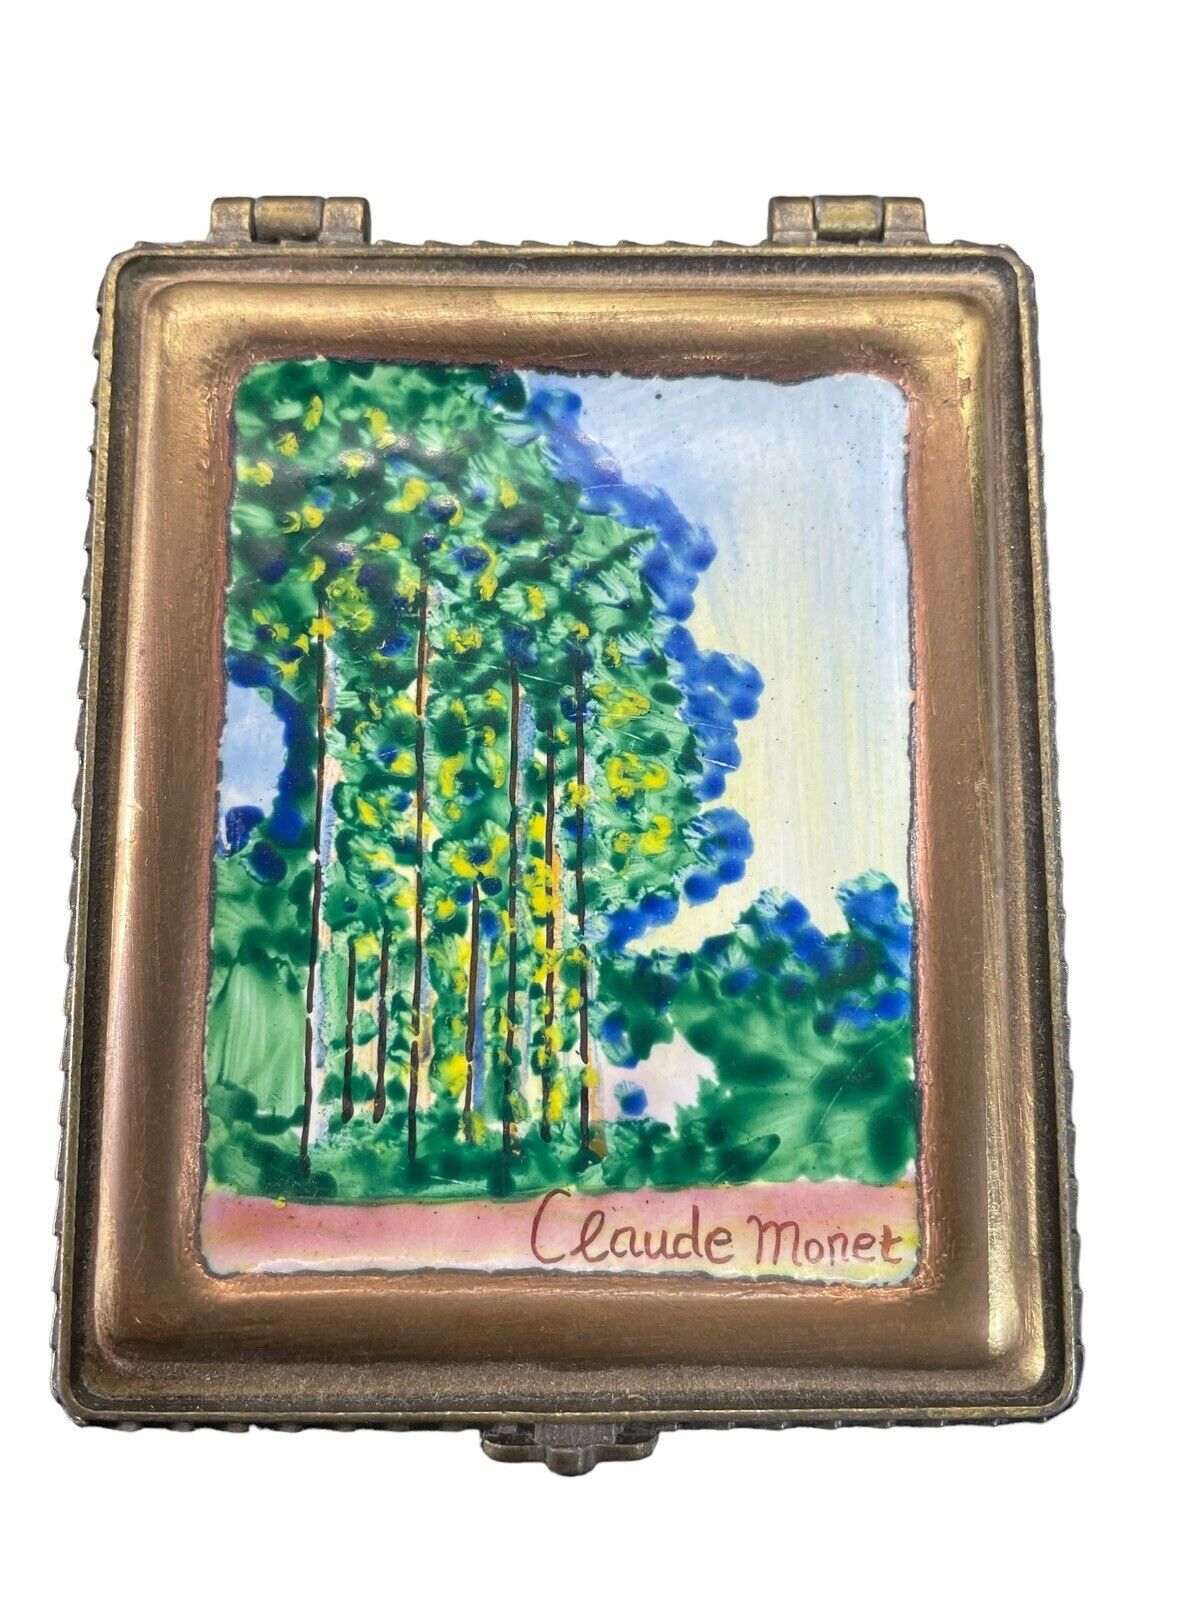 KELVIN CHEN Enamel Hand Painted Copper Trinket Box Claude Monet #669 2001